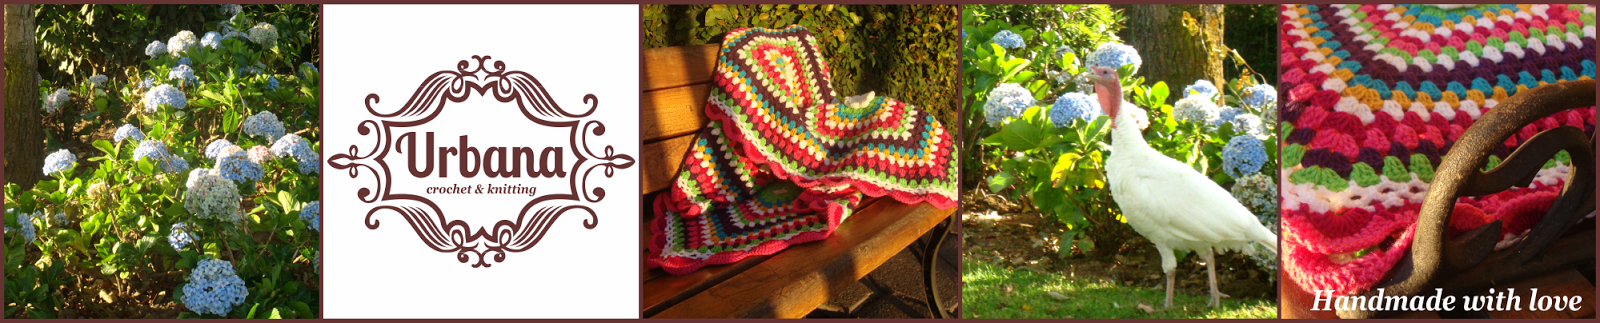 Urbana Crochet and Knitting